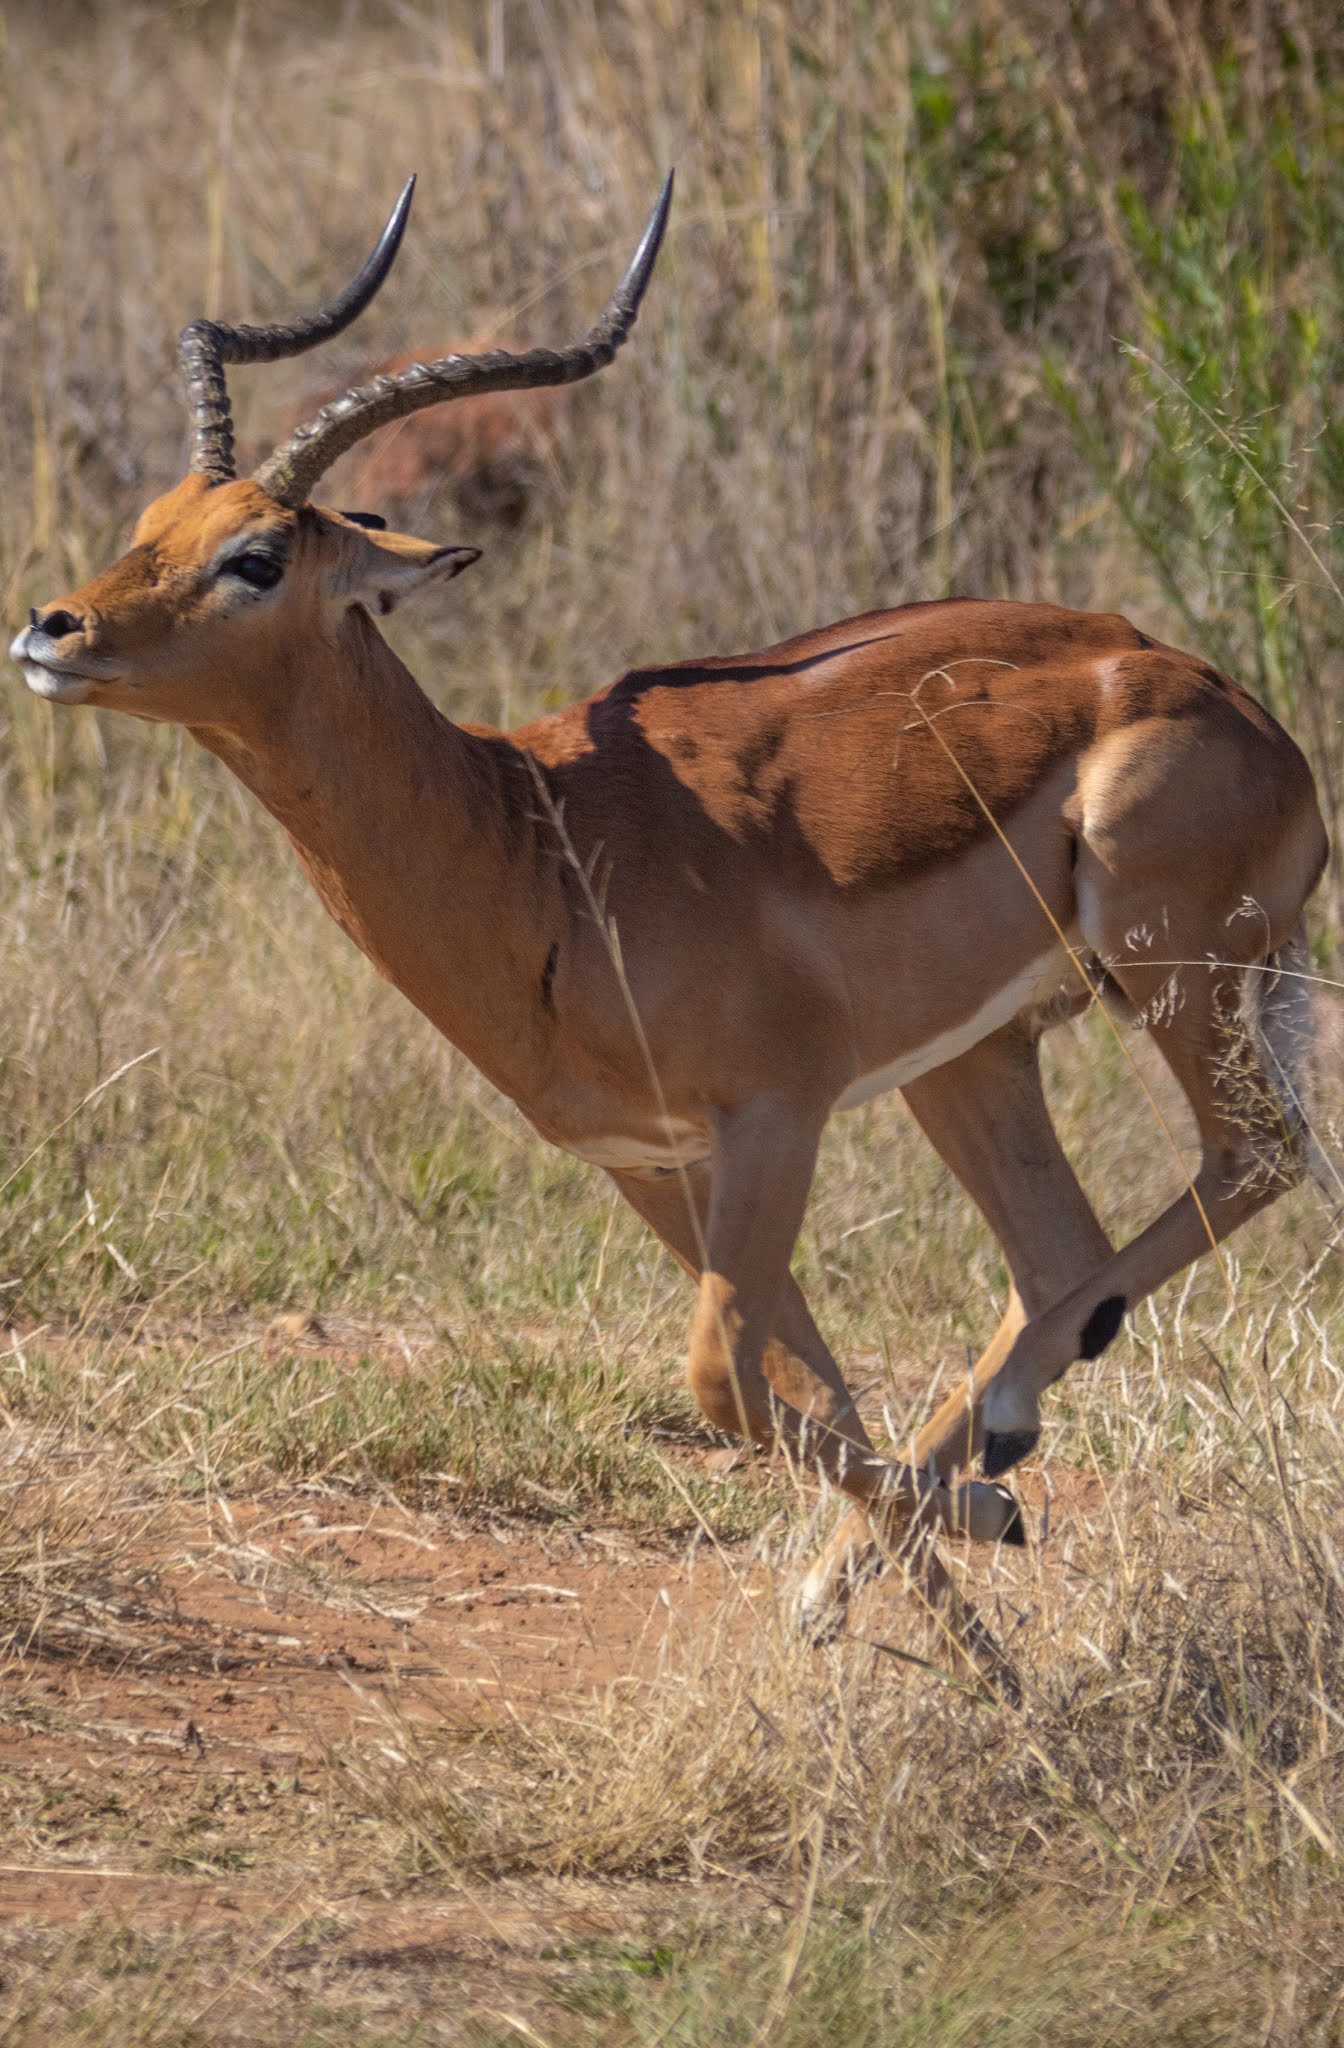 Gazelle running after sensing danger - About Wild Animals